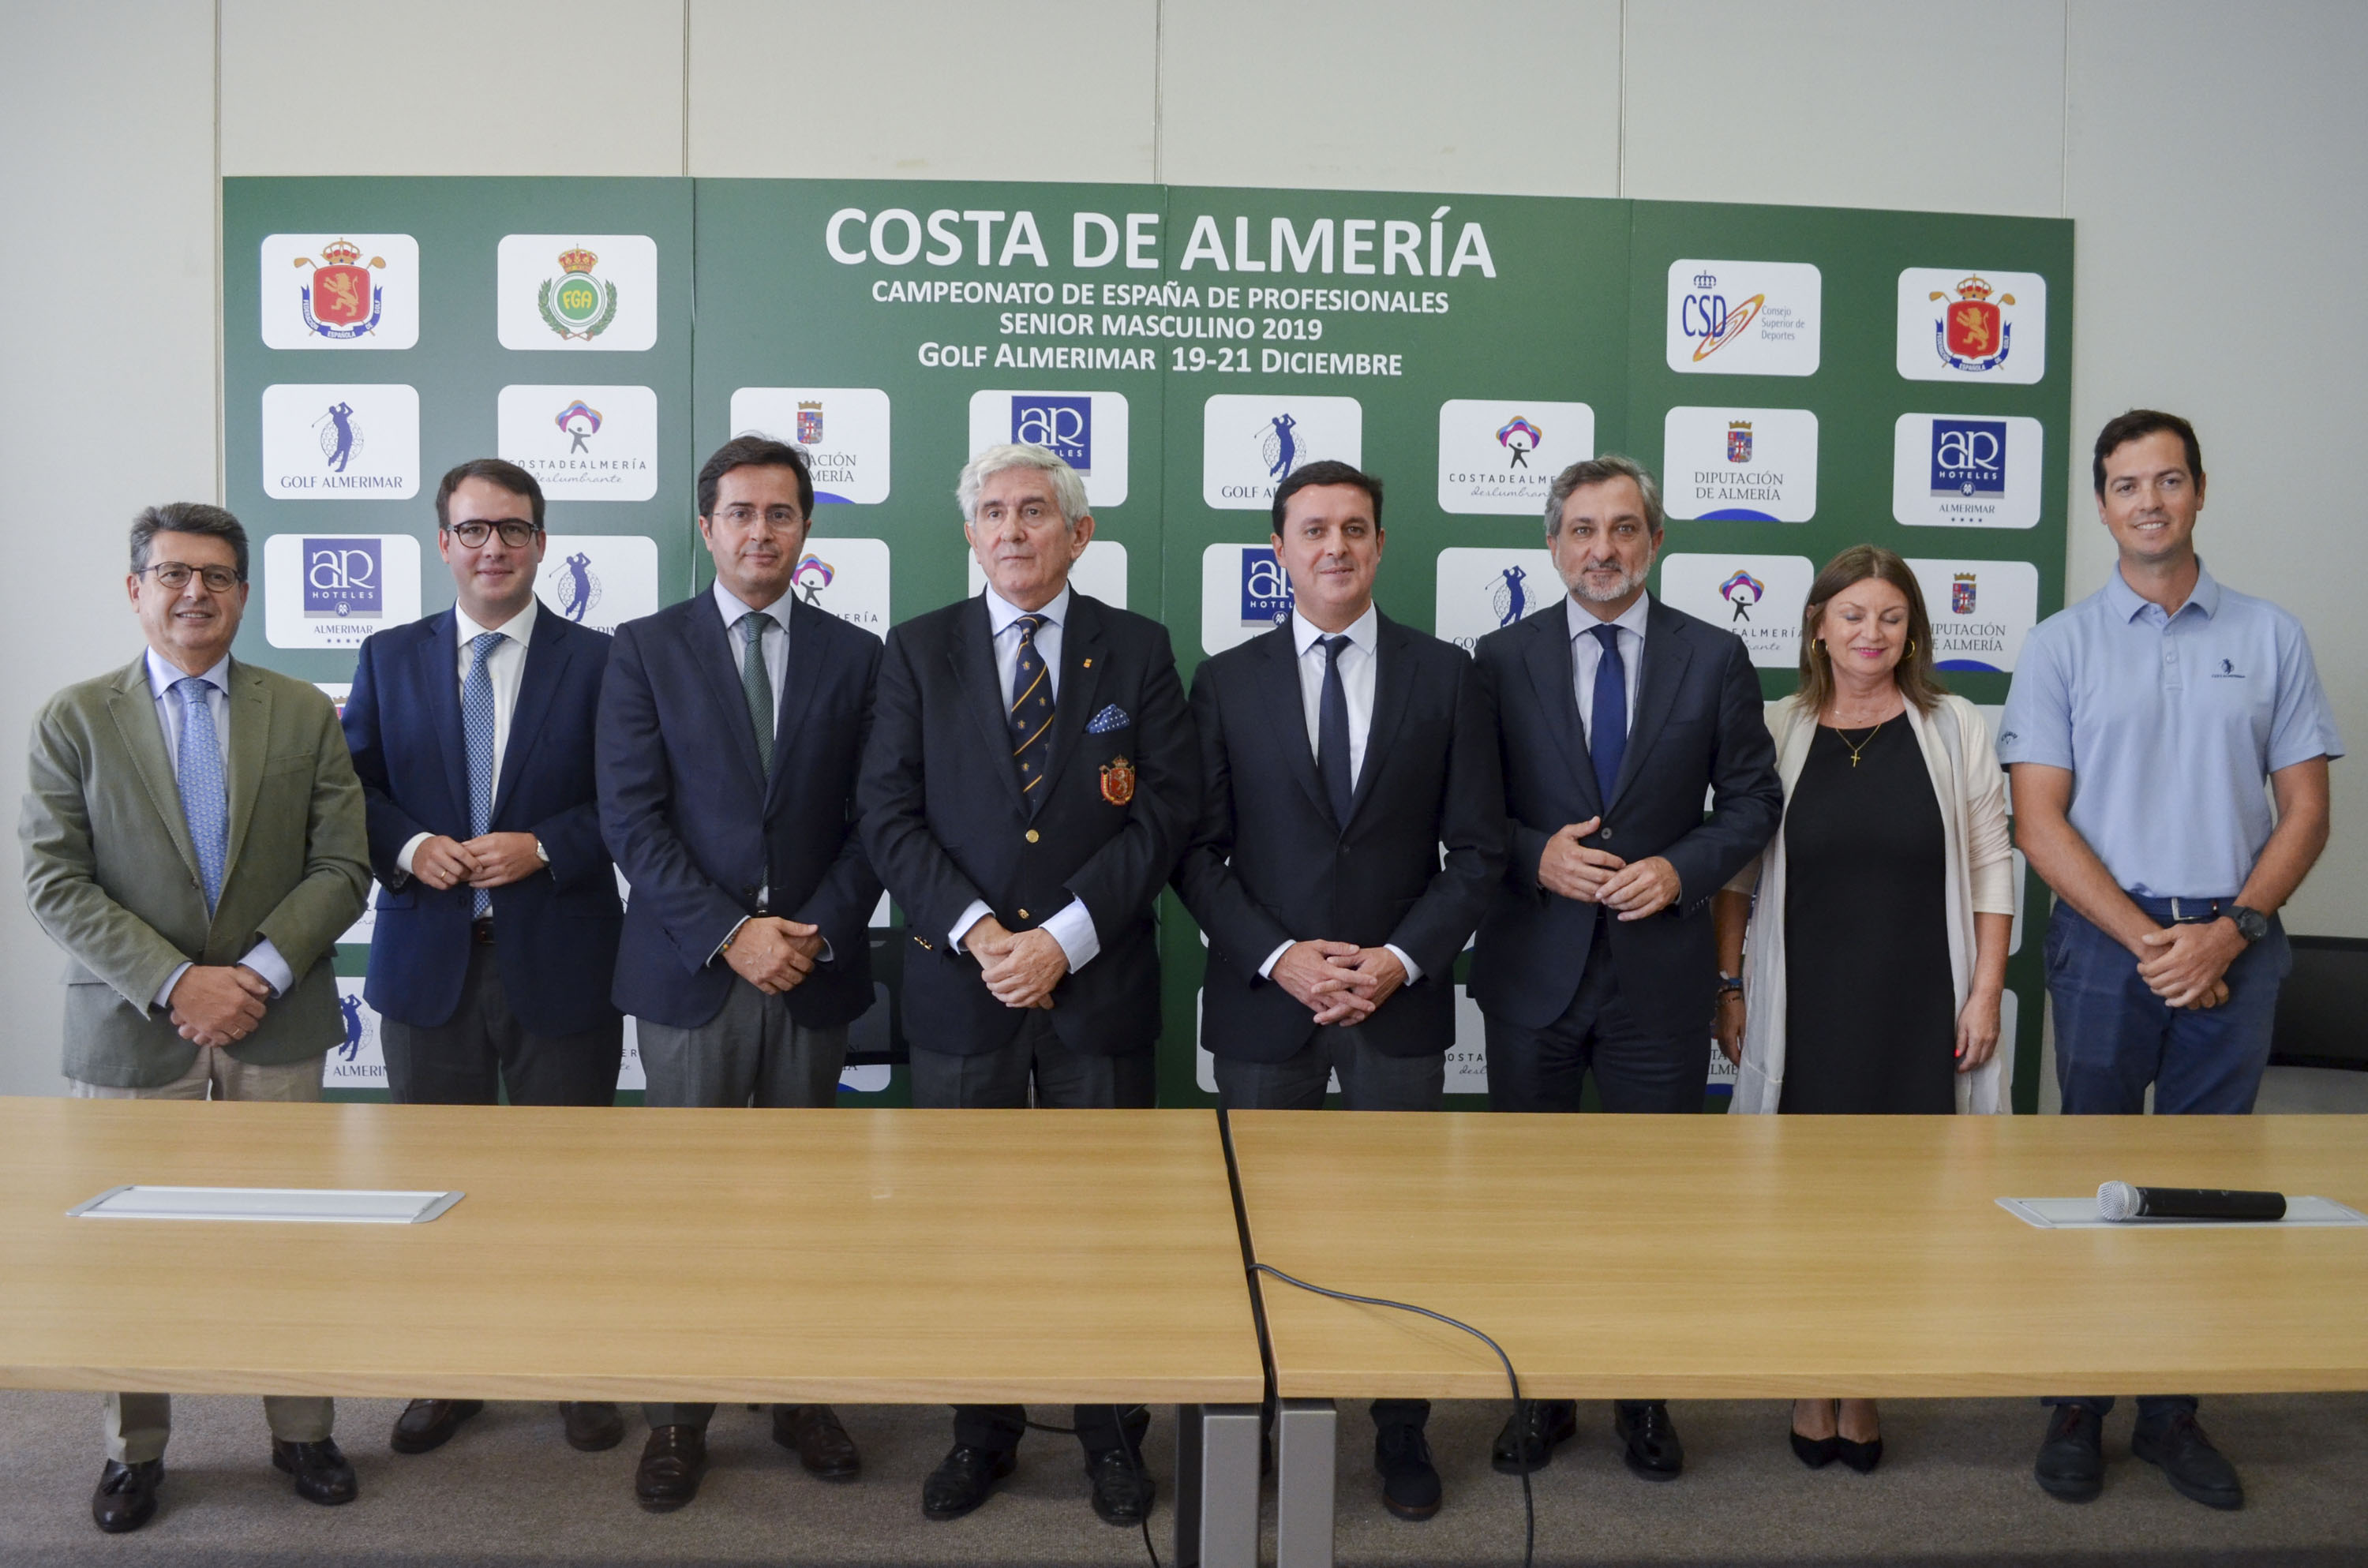 Campeonato de España de Profesionales Senior de Golf 'Costa de Almería' - Diputación Almería